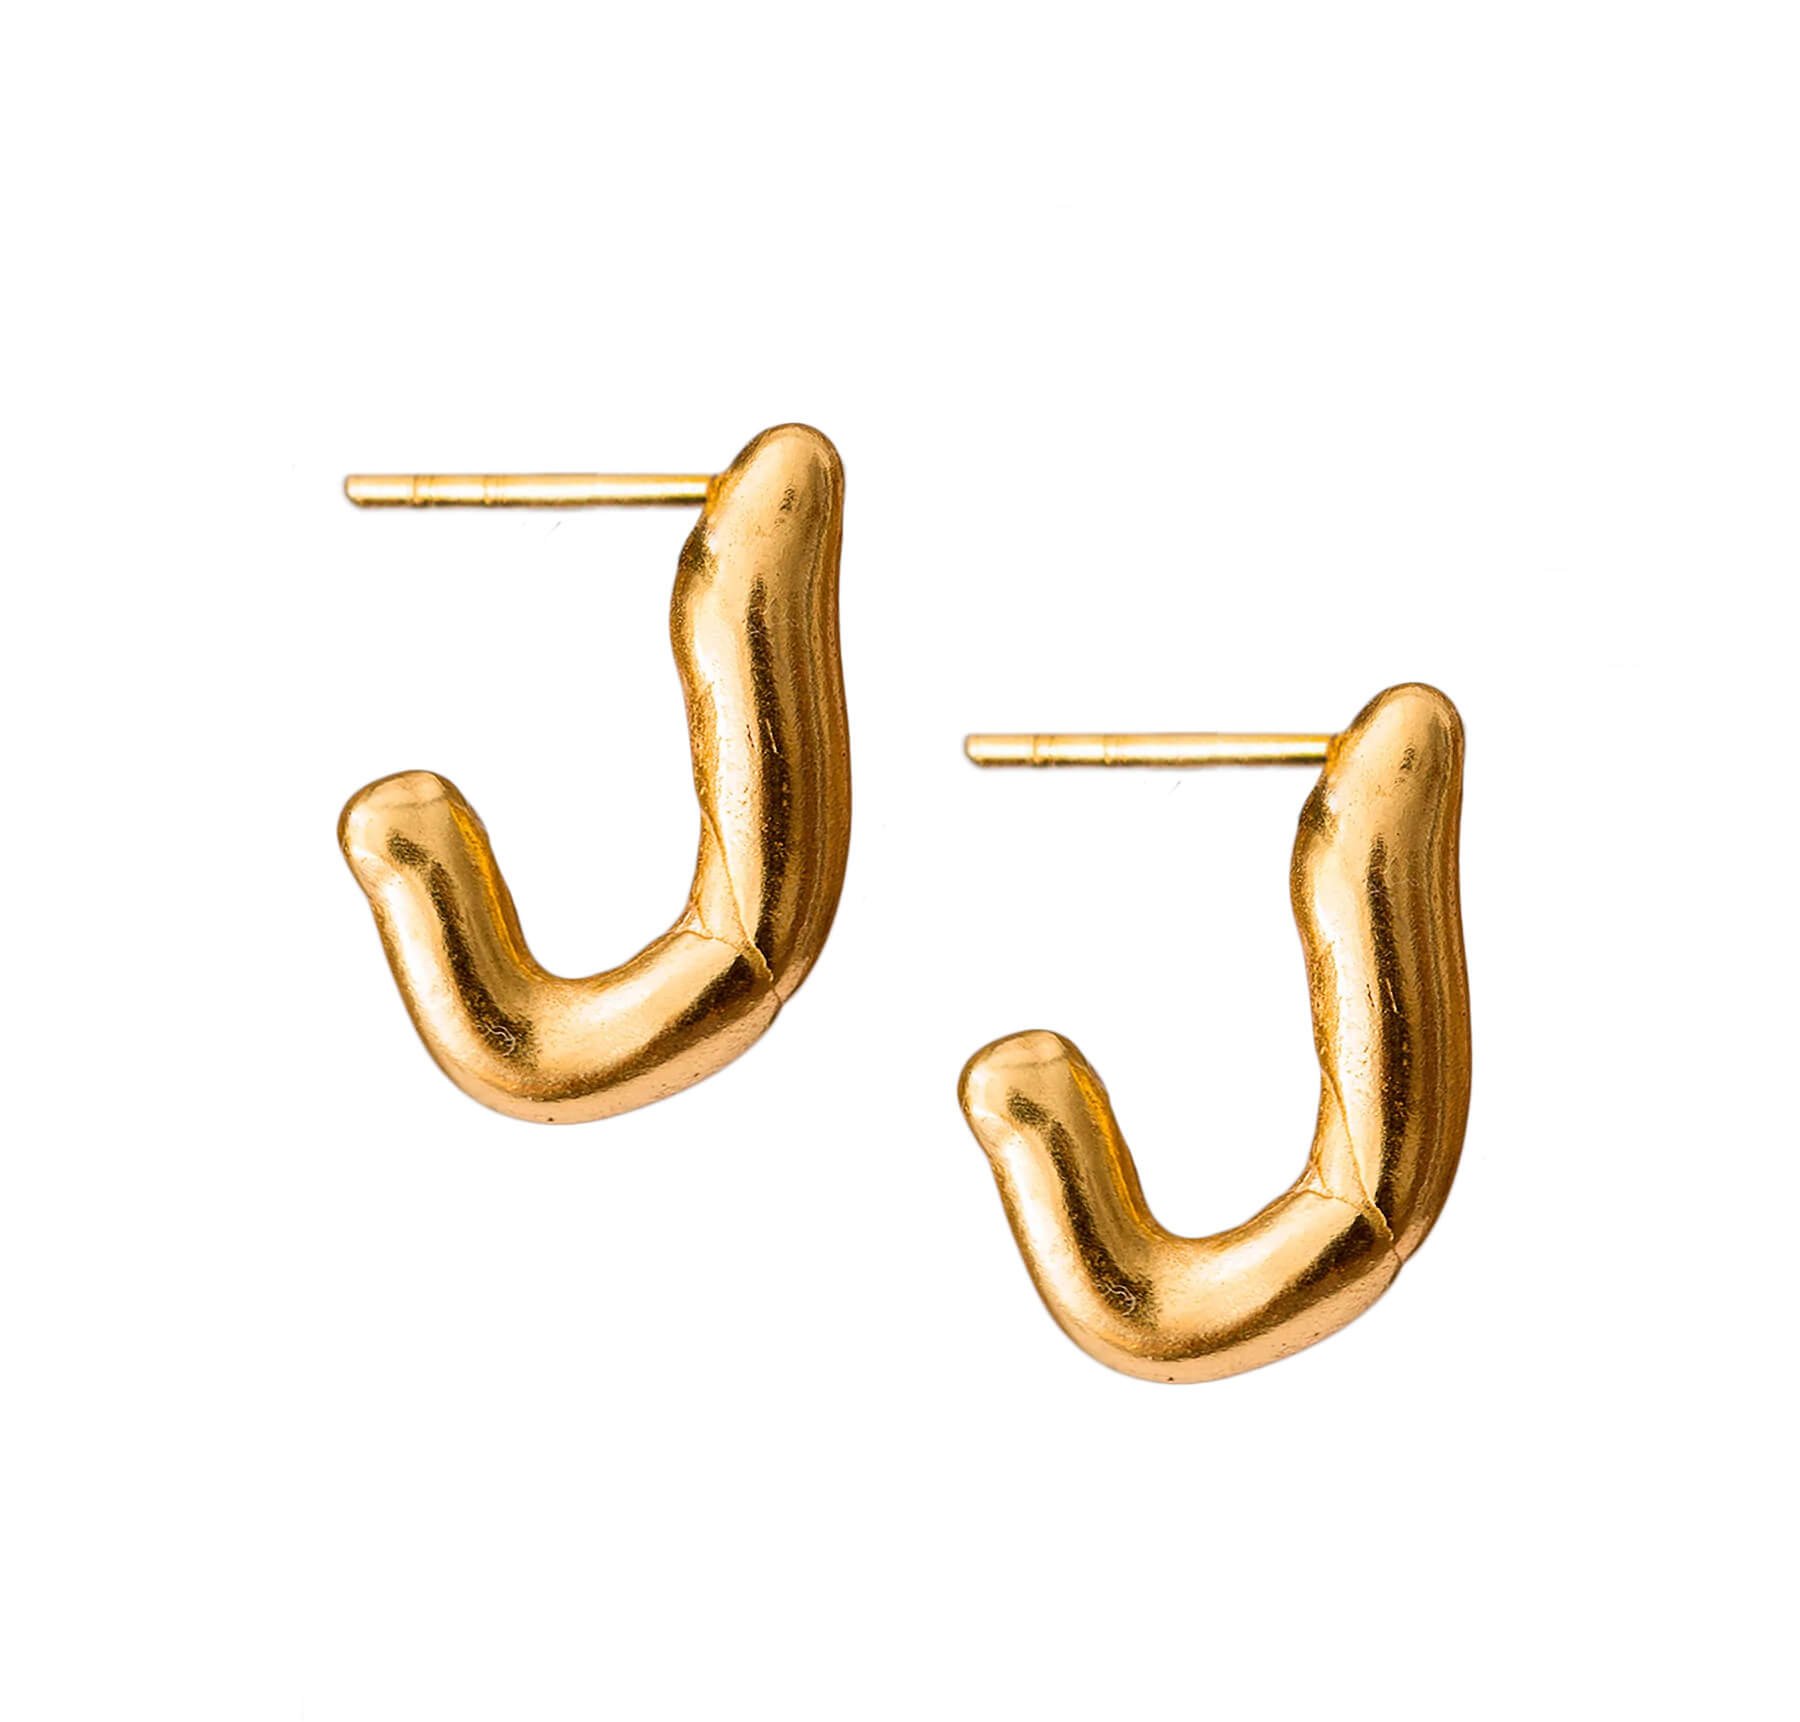 Valencia: Simuero “Gamba” earrings, $117.70 